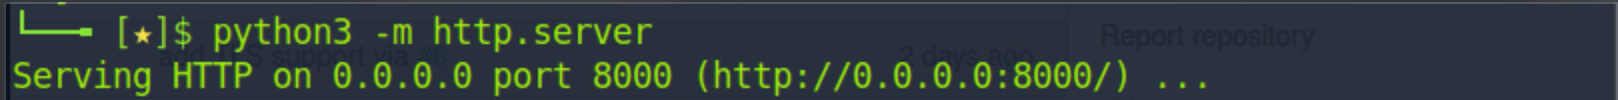 initiated a python webserver (python3 -m http.server) to serve the poc2.xml file.